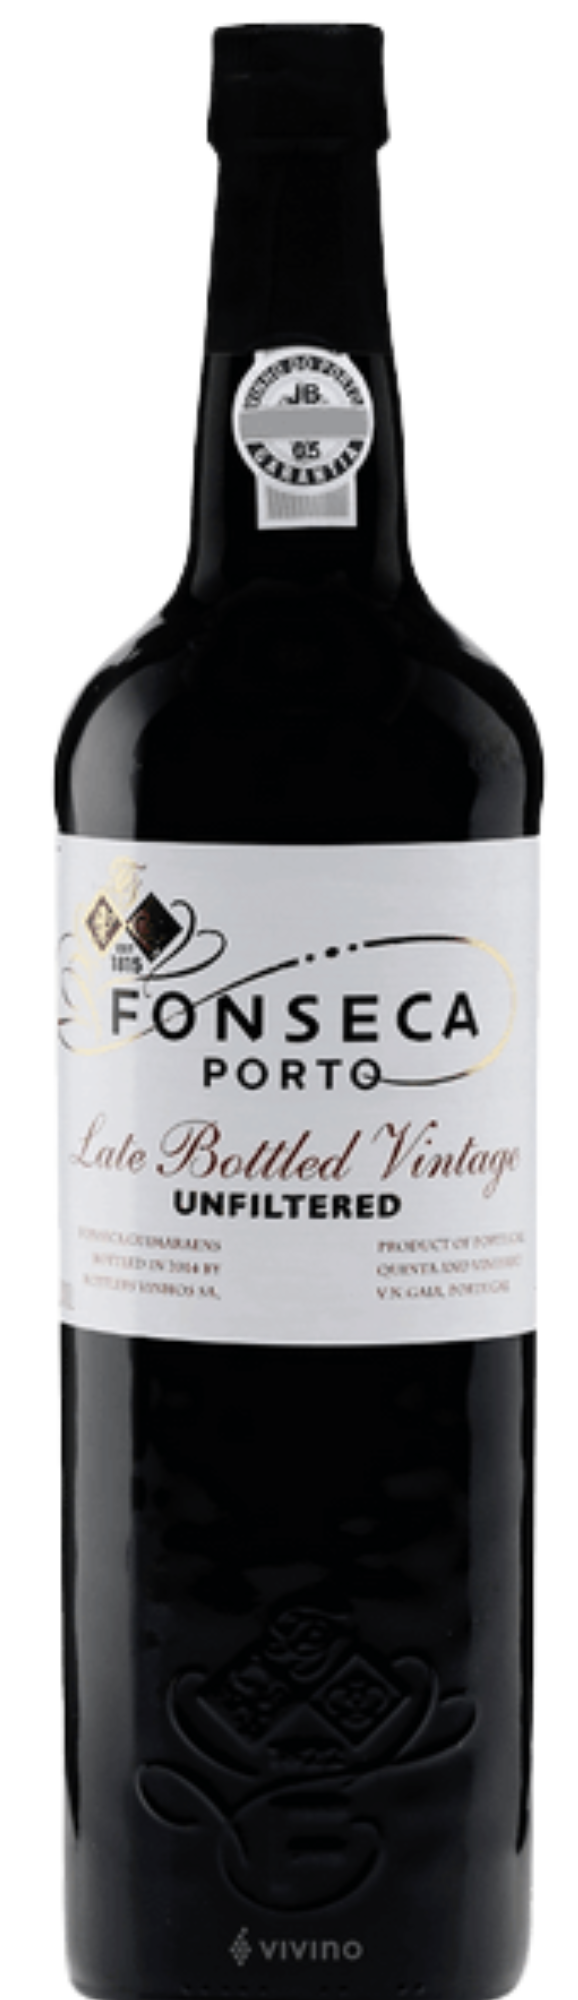 Fonseca LBV 2015 Unfiltered Port